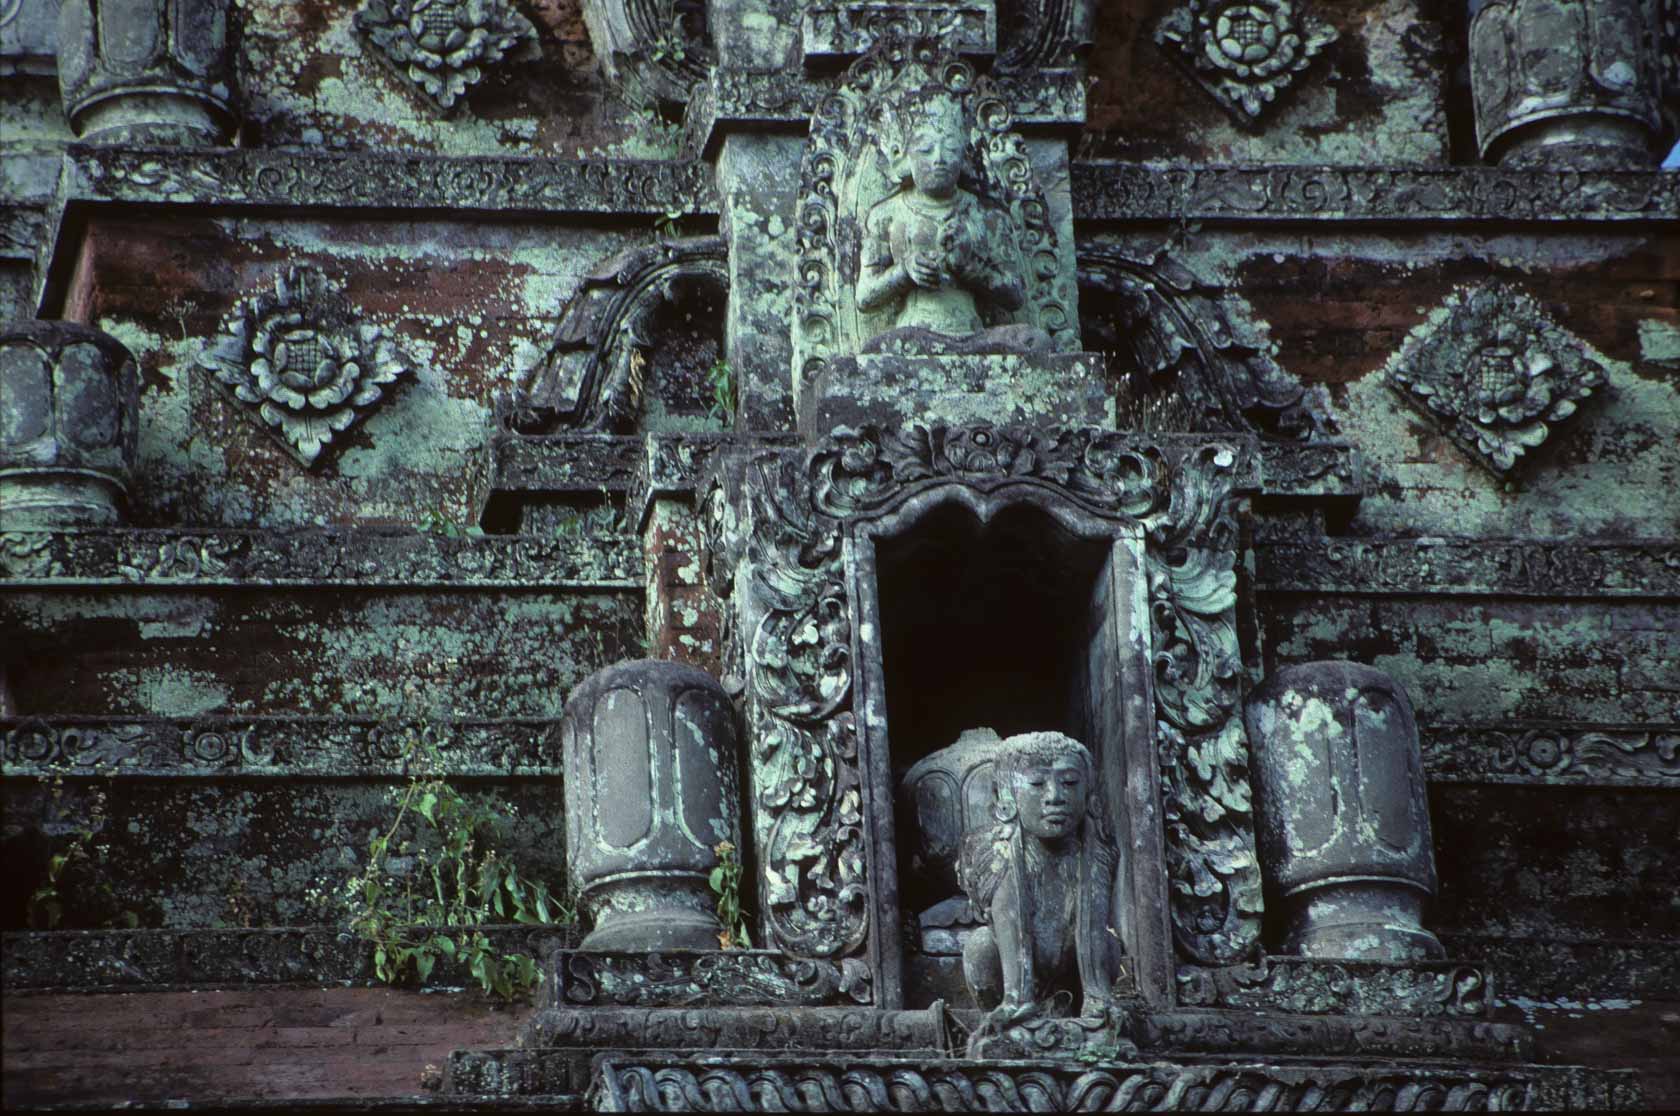 <span style="font-family: Verdana; font-size: 16px; color: ">Pura Gede Perancak, tempel op Bali</span>